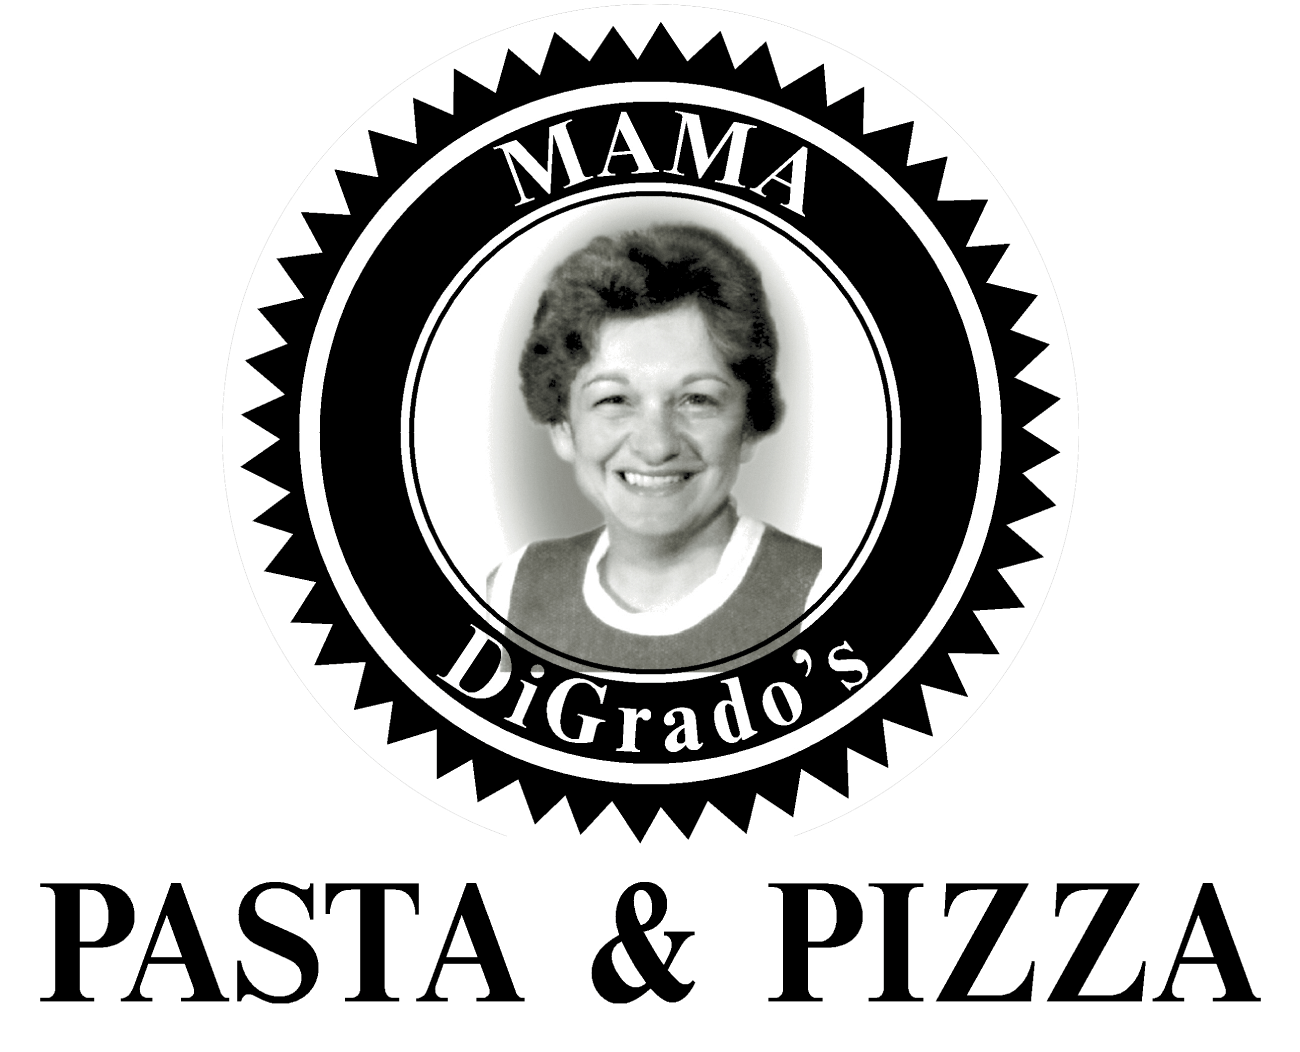 Mama Digrado's logo top